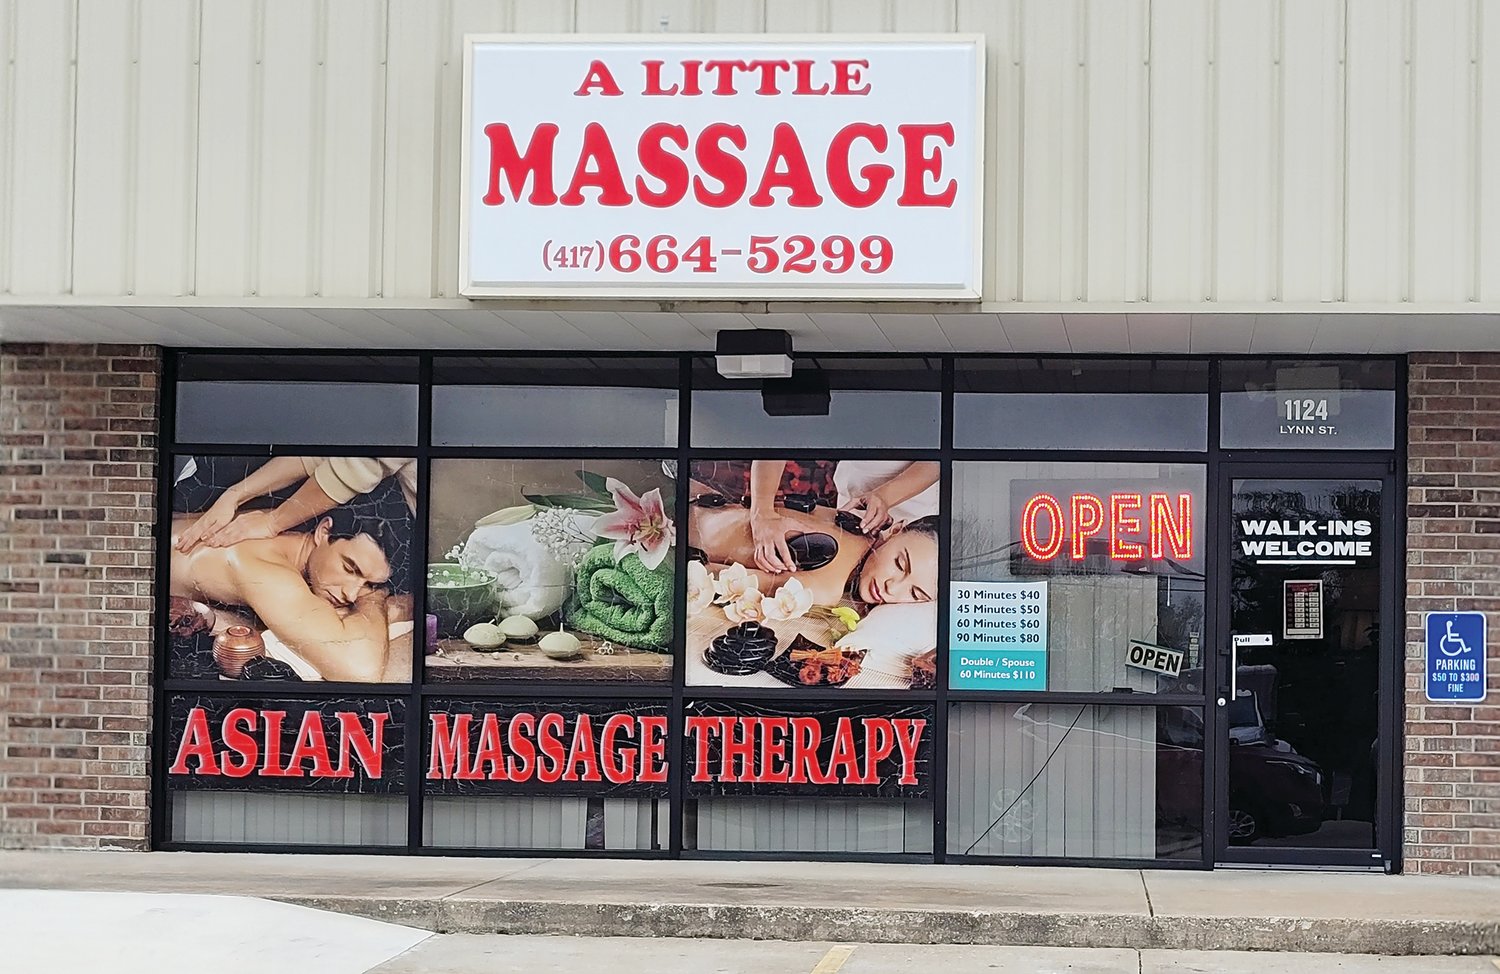 Asian masage parlor dallas